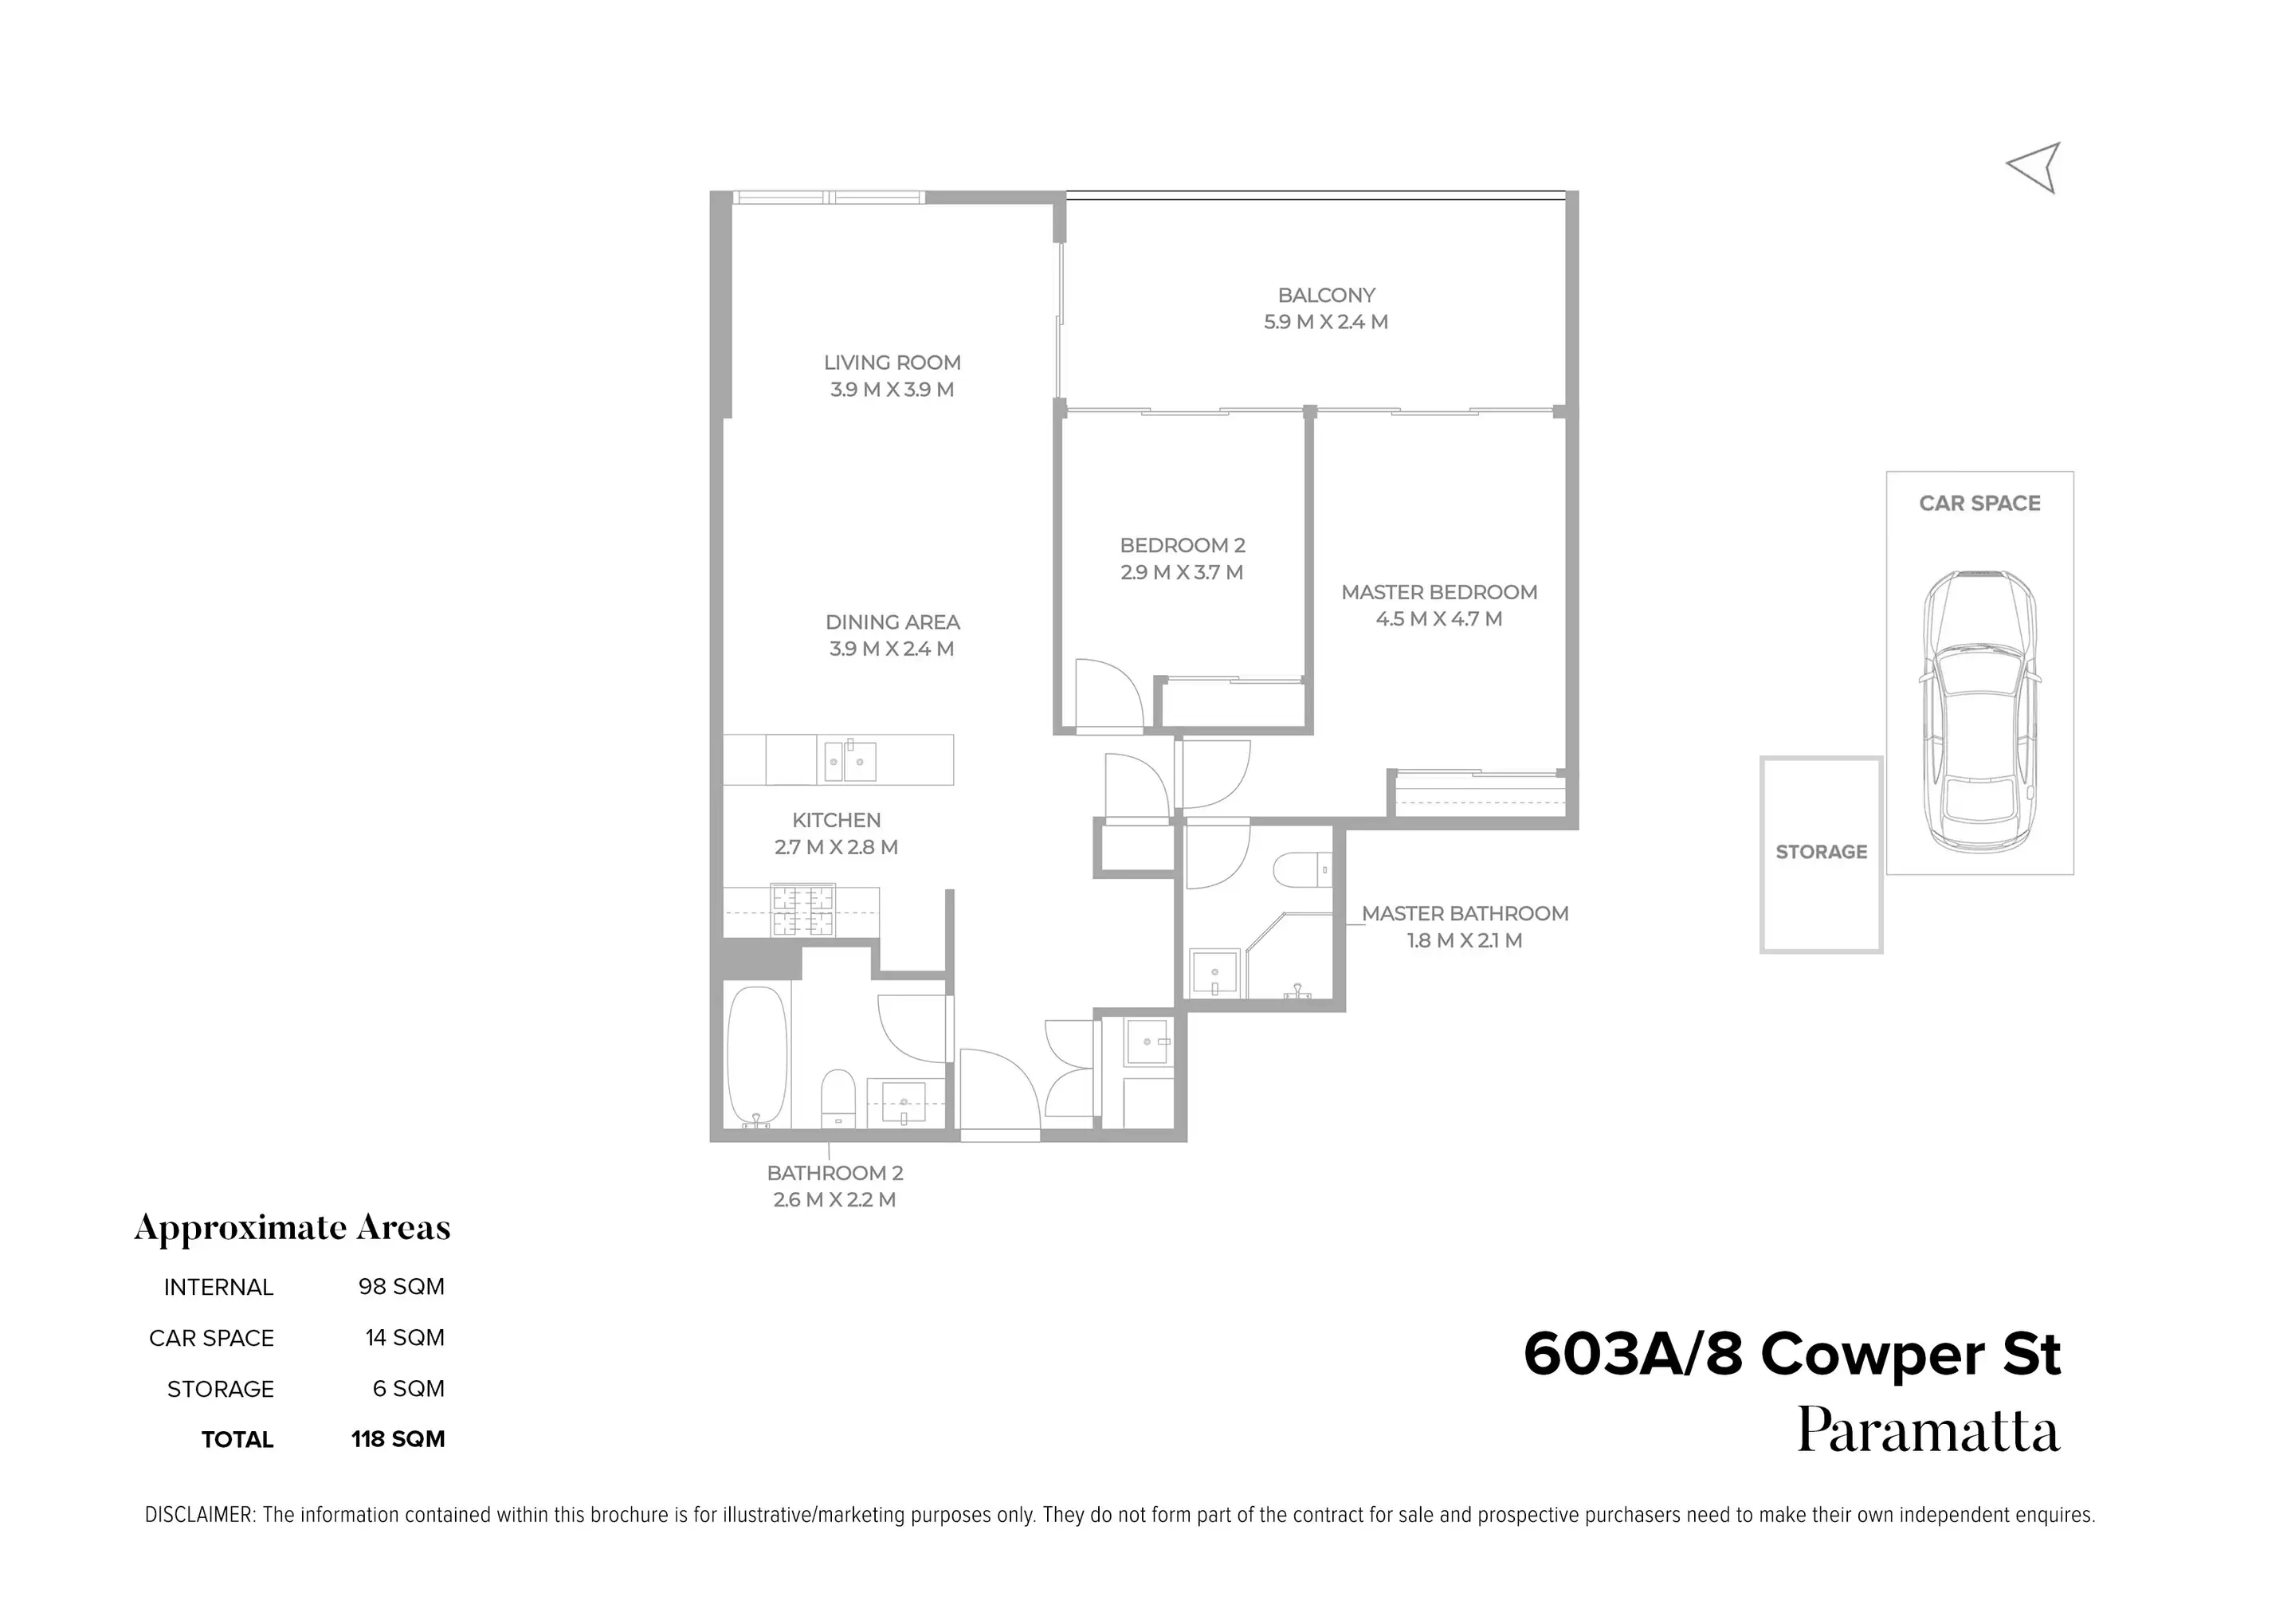 603a/8 Cowper Street, Parramatta For Sale by Chidiac Realty - floorplan